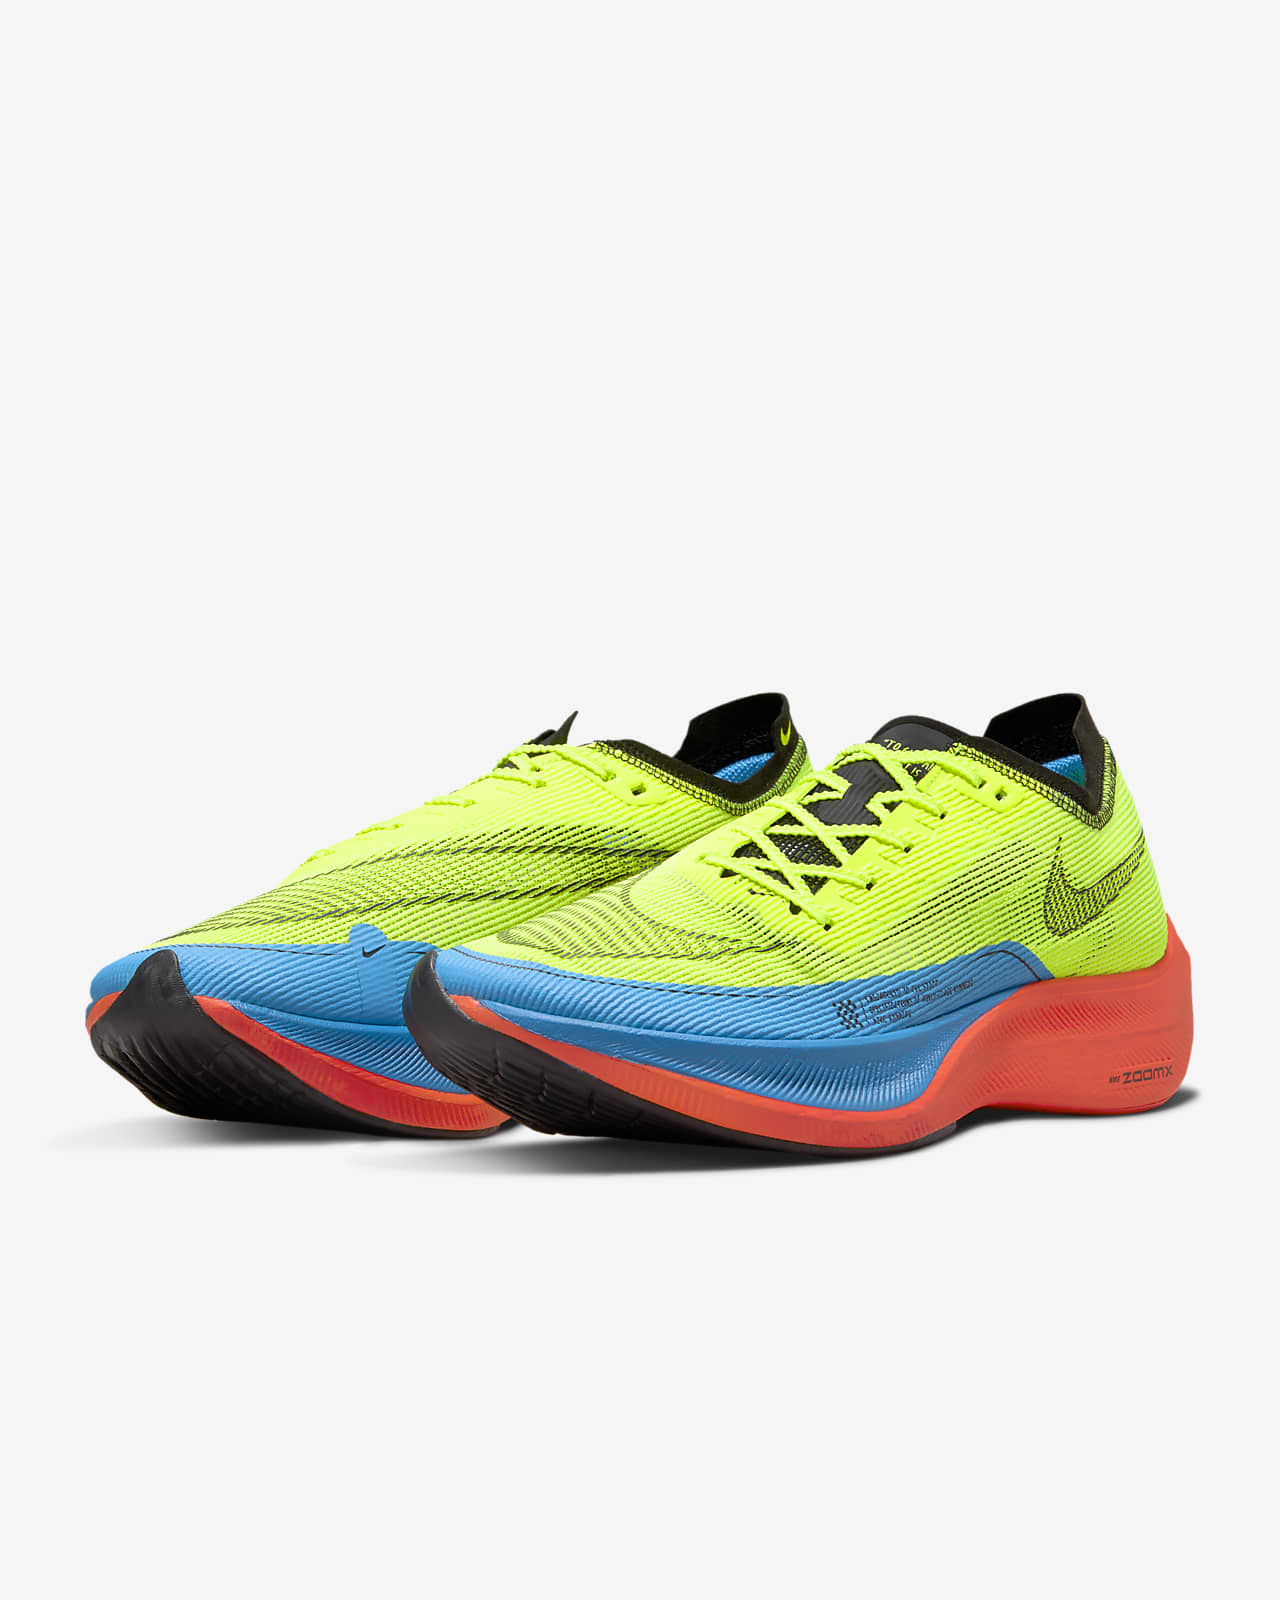 Nike Vaporfly 2 Men's Road Racing Shoes.